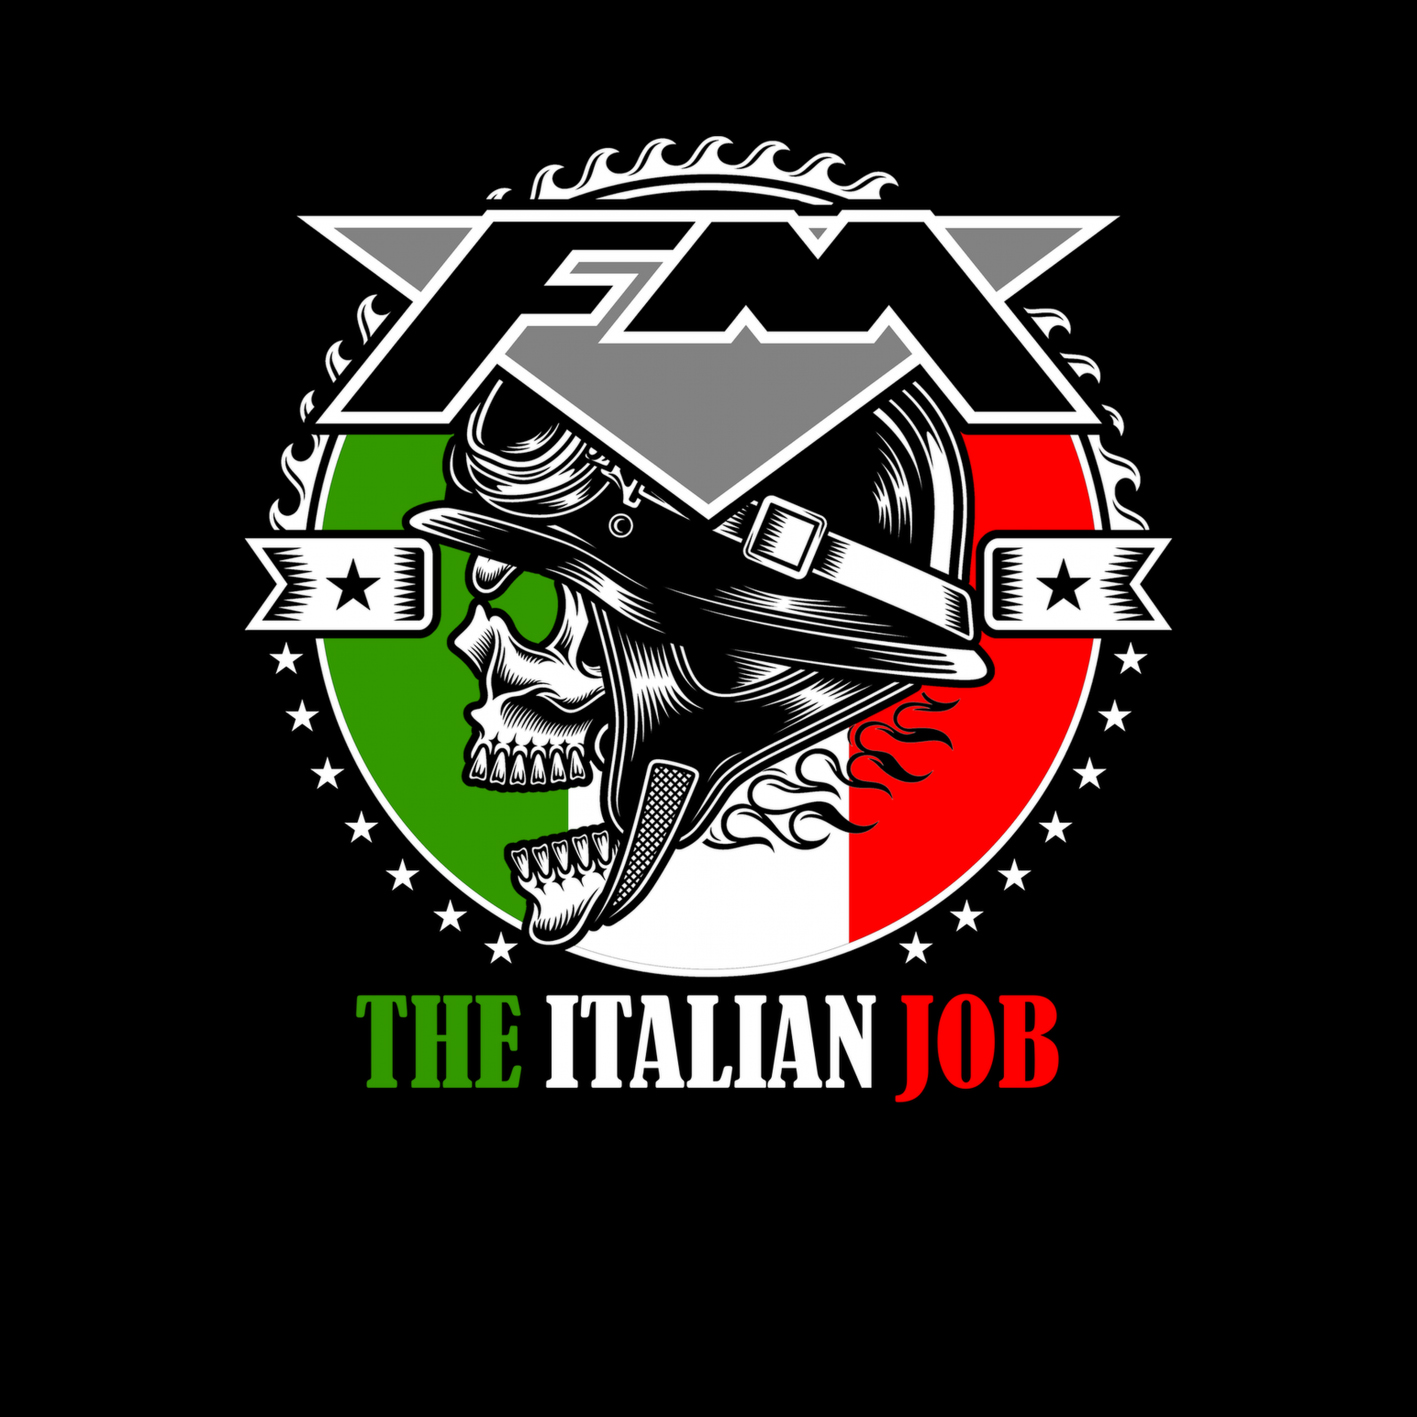 FM - “The Italian Job”